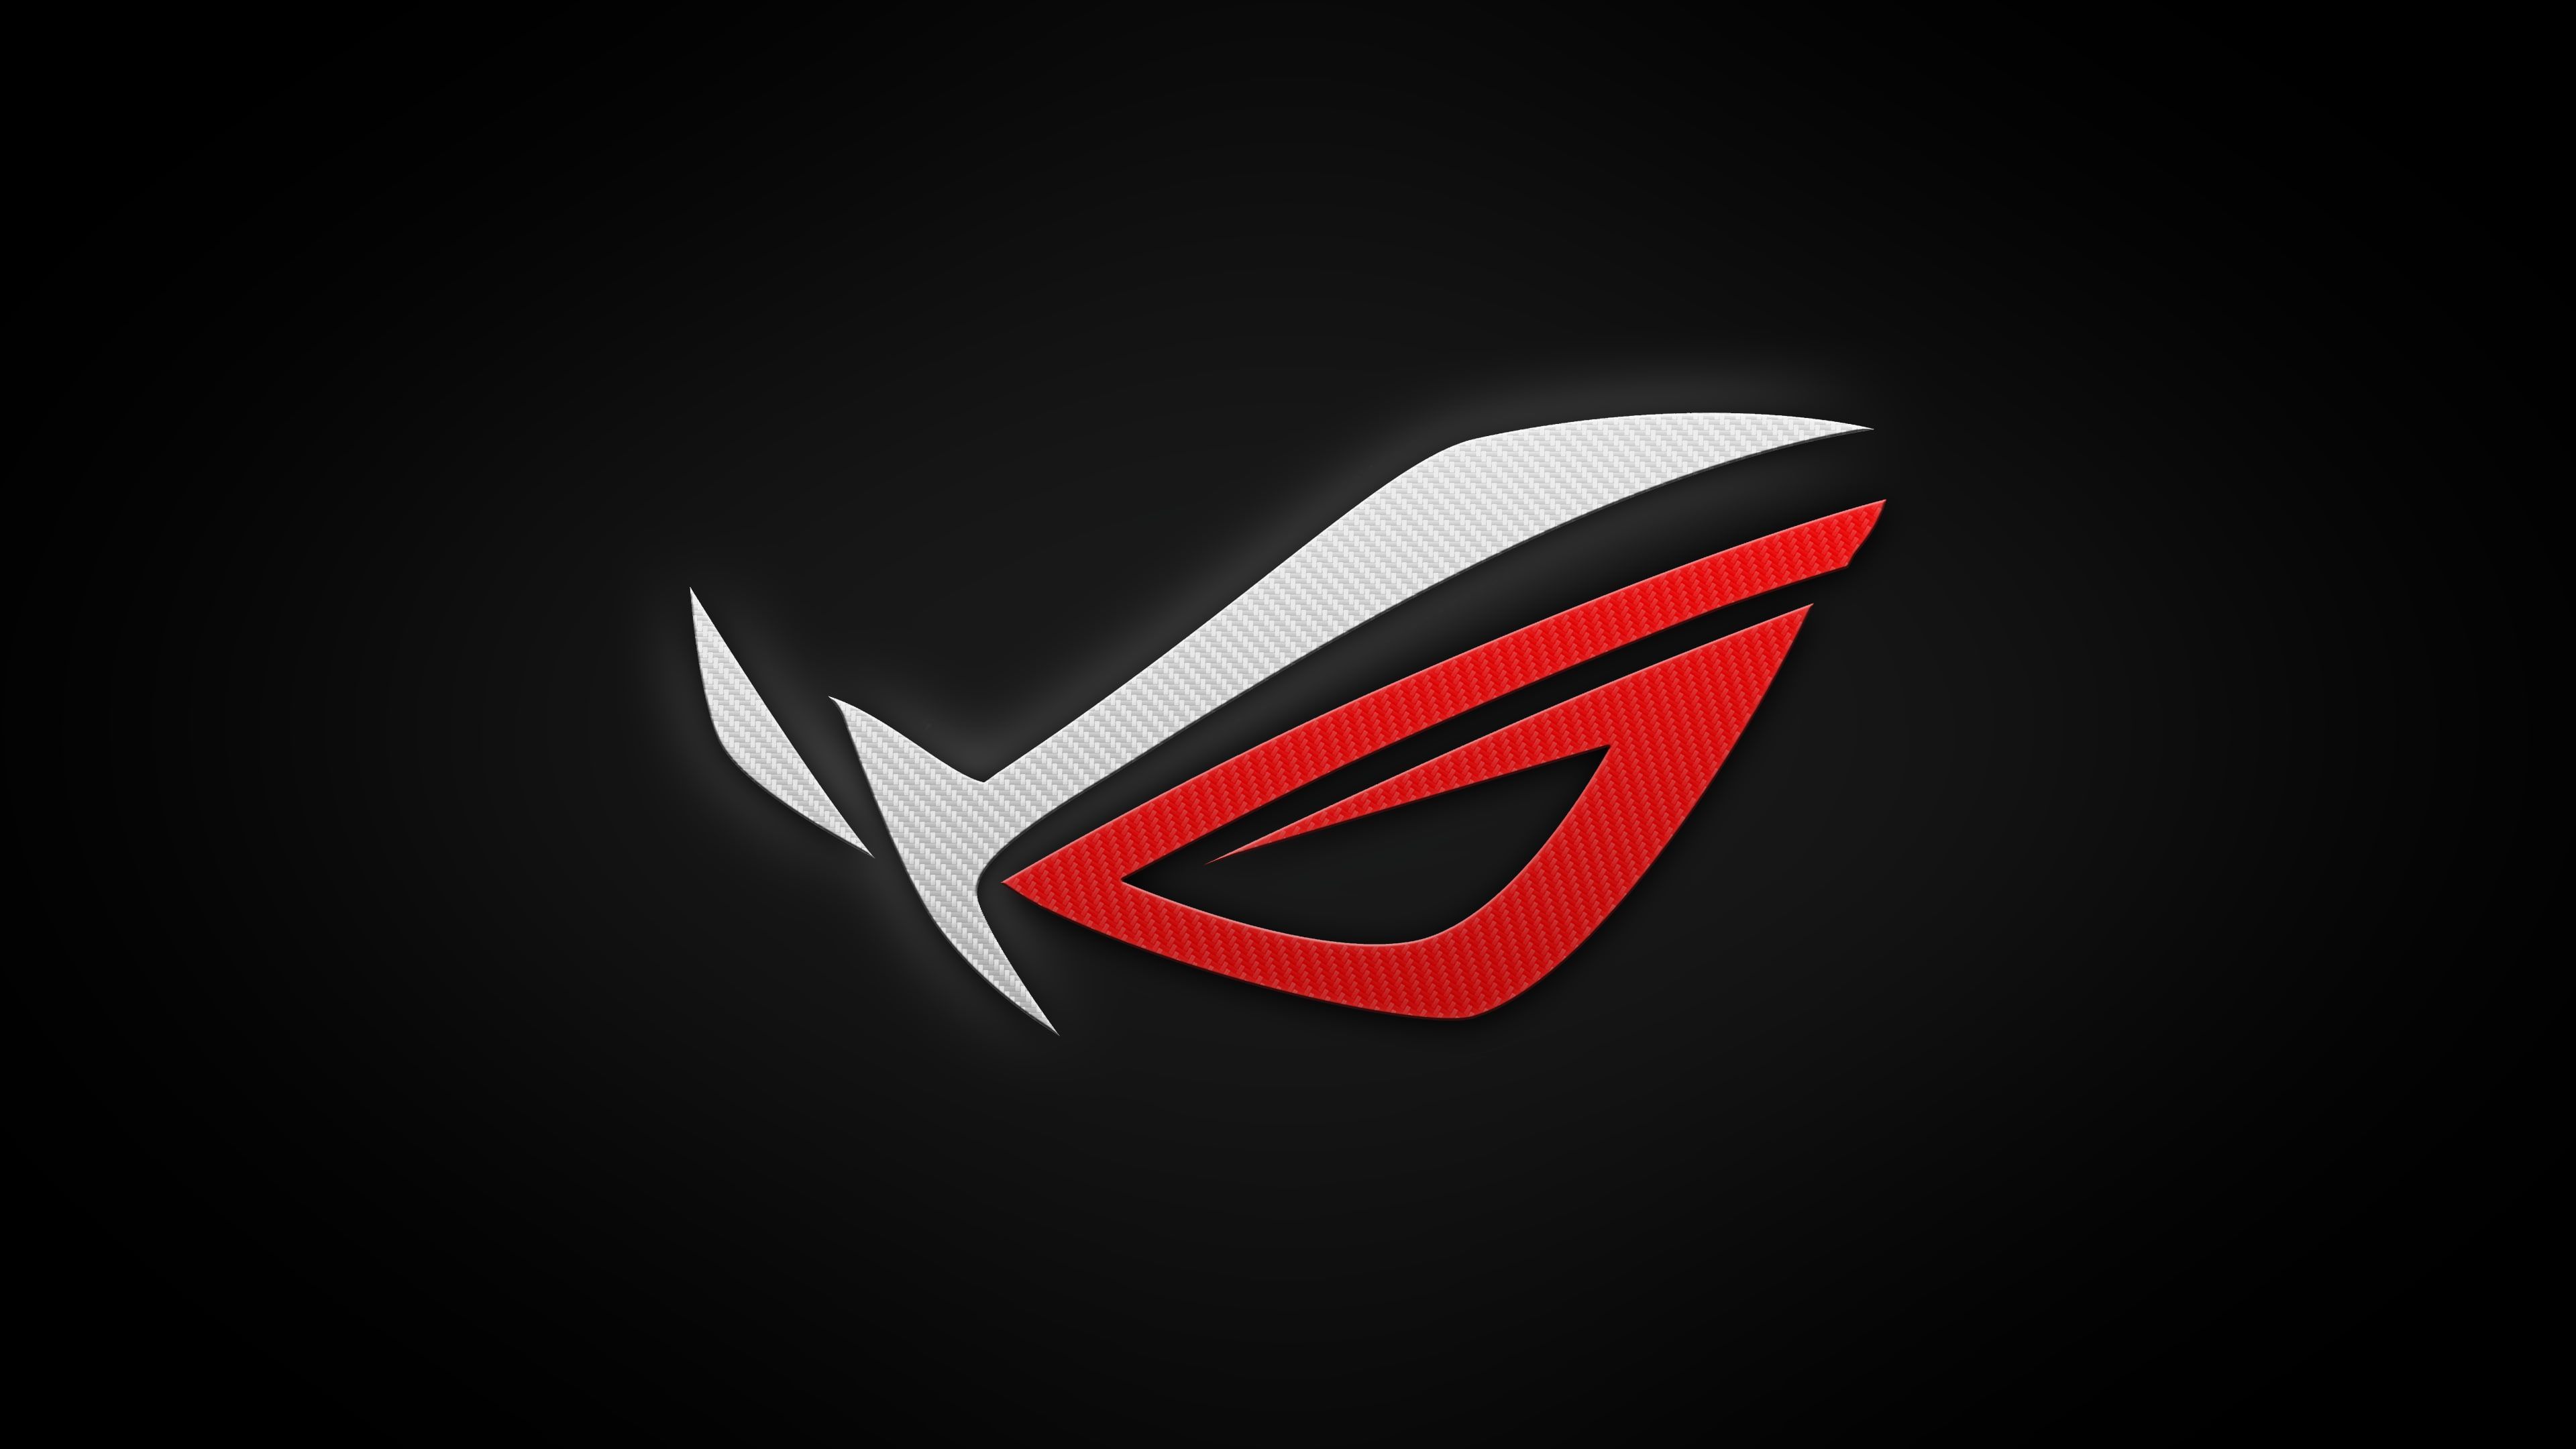 Asus ROG logo, Republic of Gamers, black background, illuminated. Objek gambar, Gambar, Desain logo